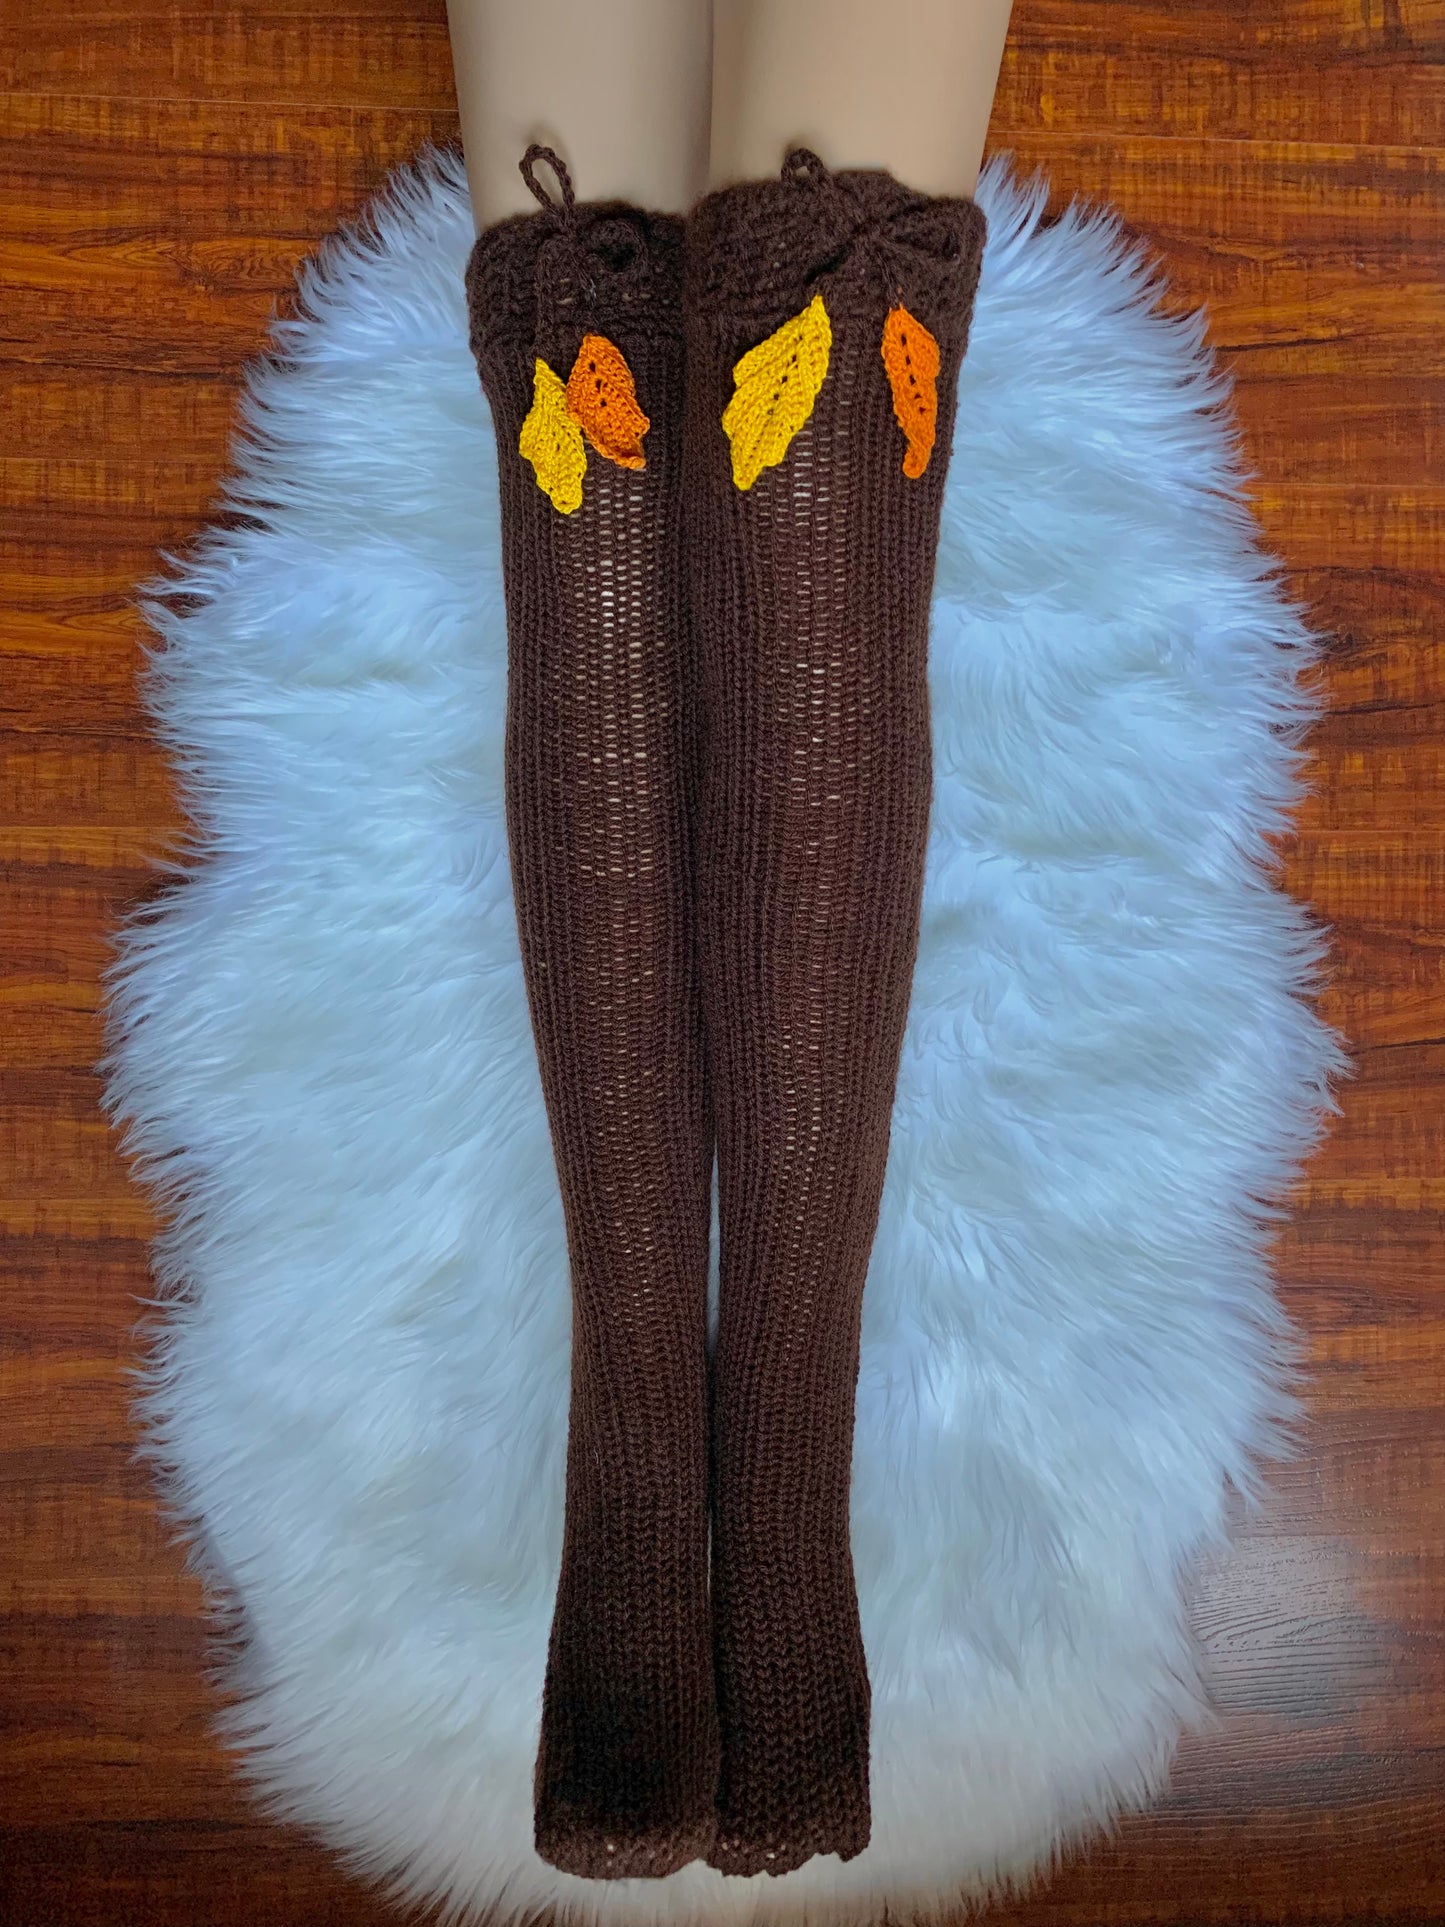 Fall Themed Knitted High Knee Socks